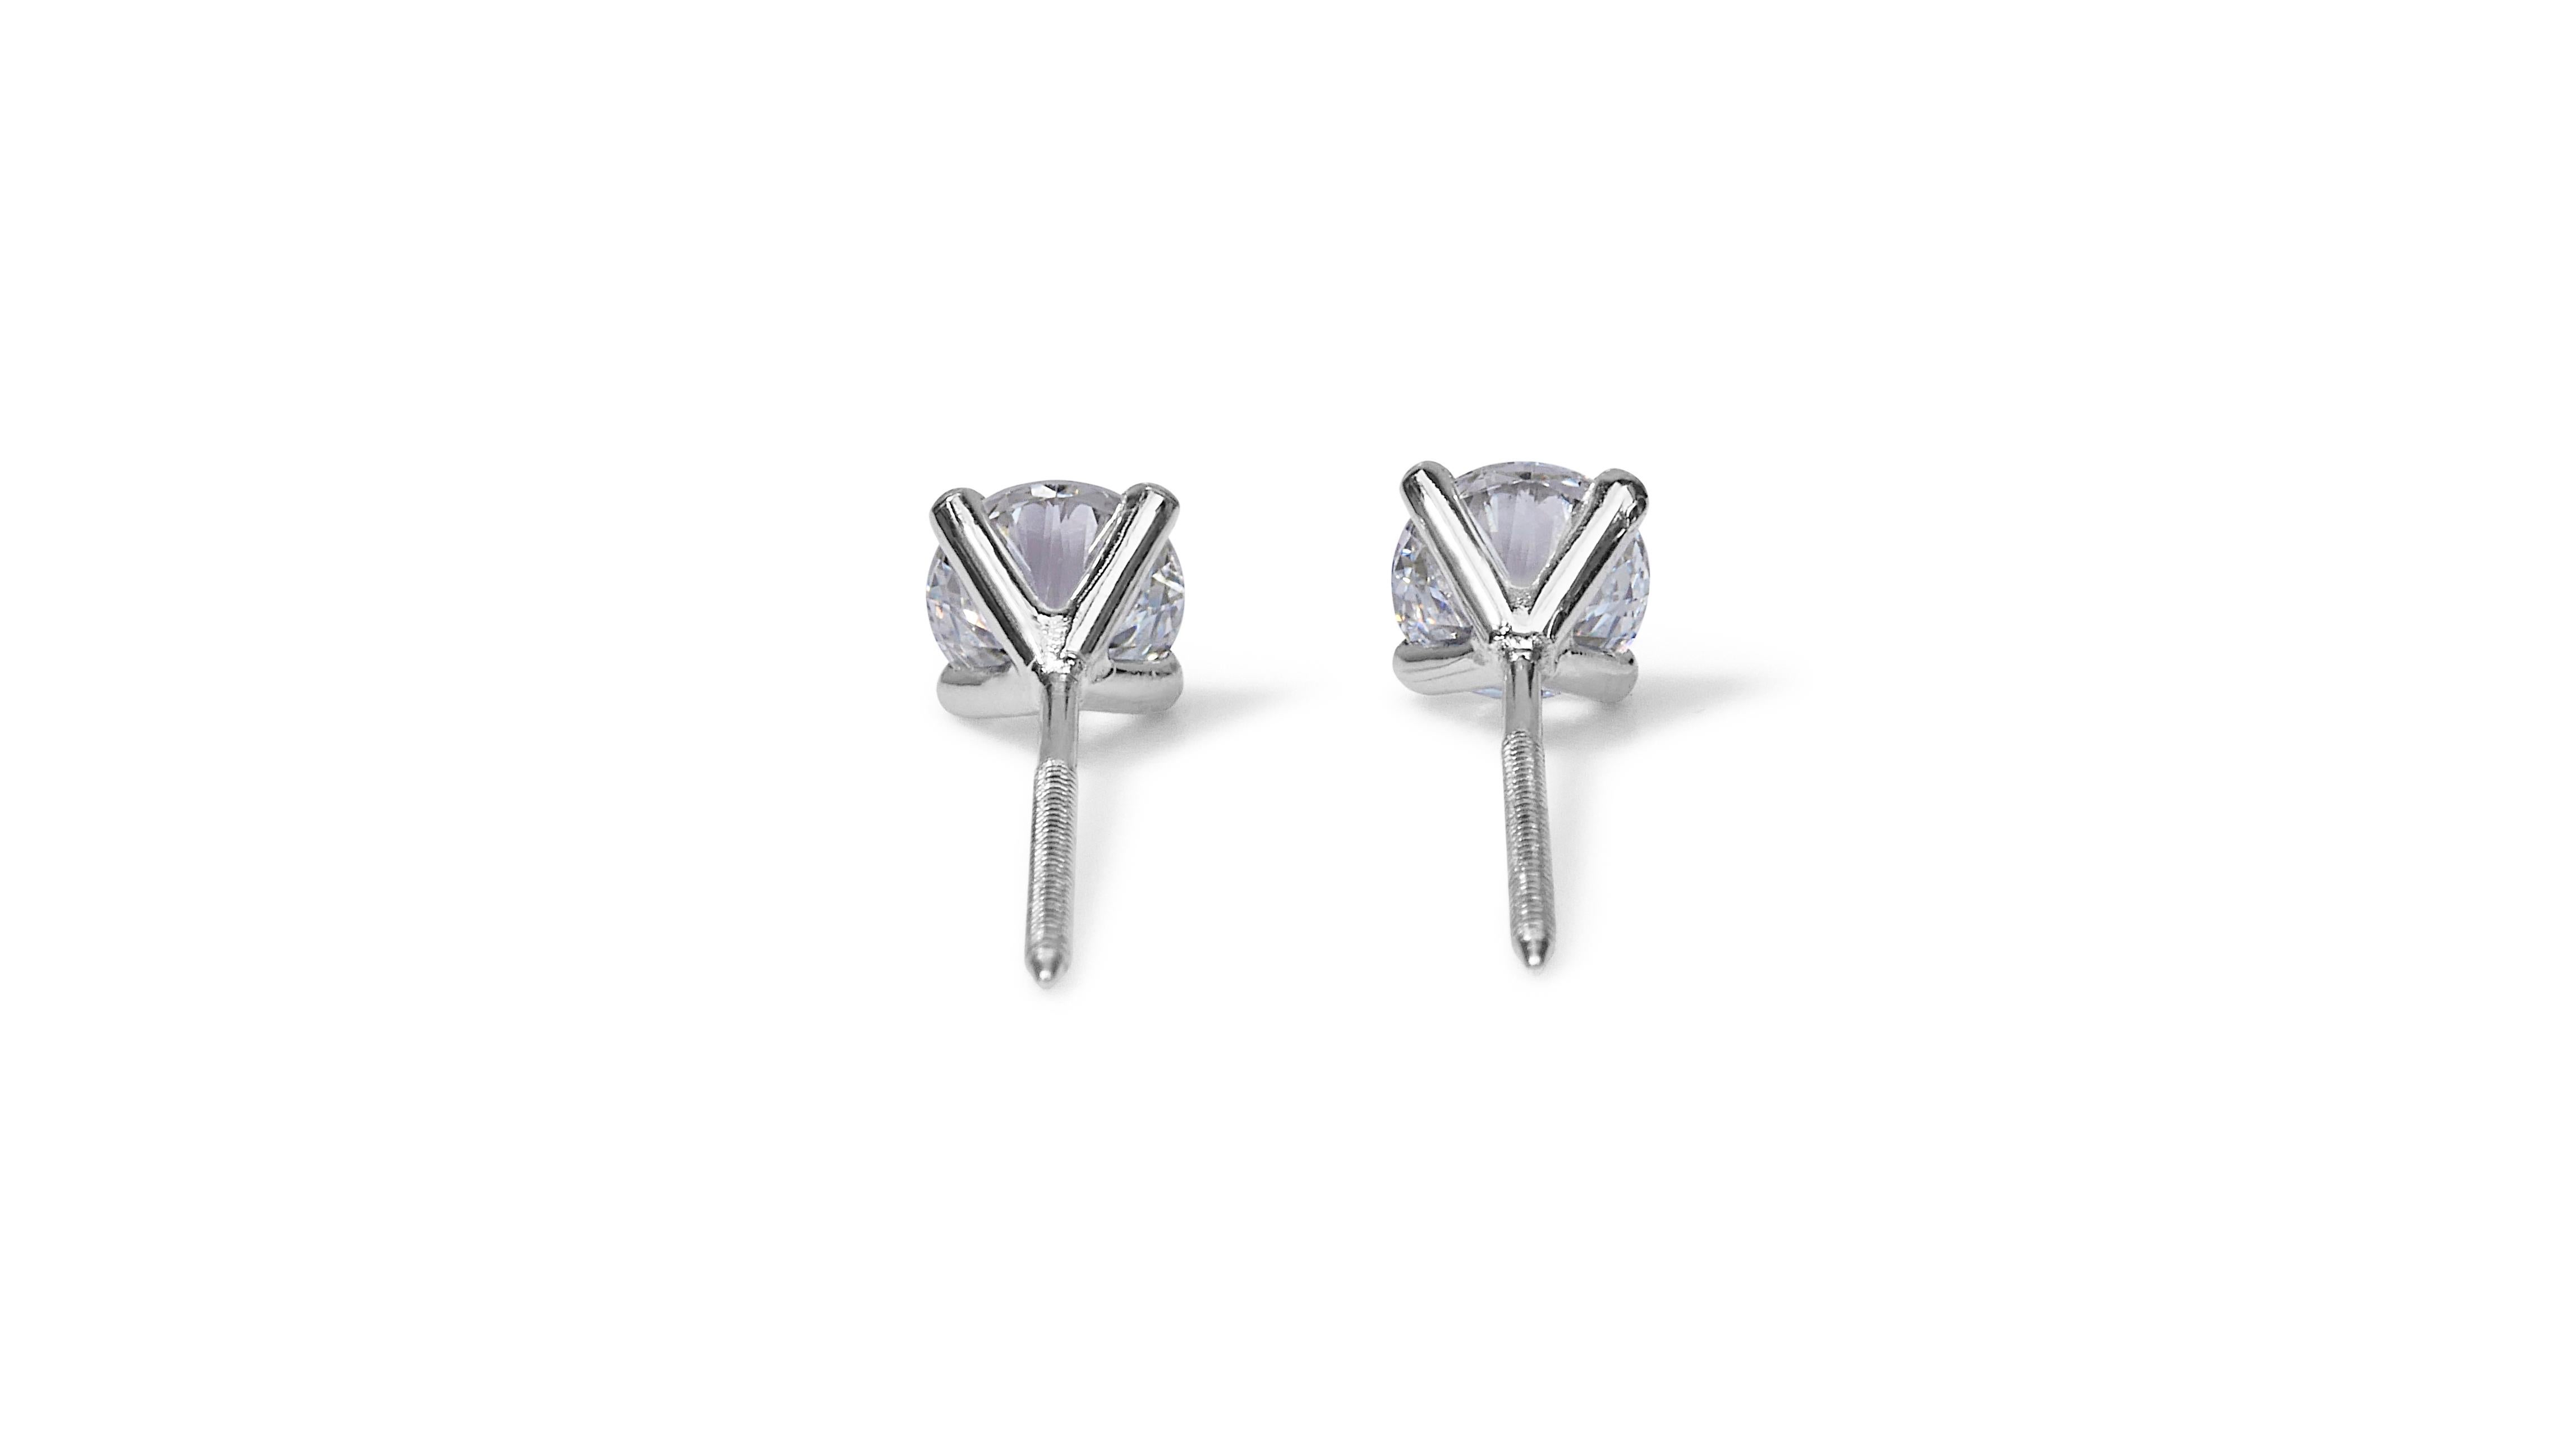 Mesmerizing 2.01ct Diamond Stud Earrings in 18k White Gold - GIA Certified  For Sale 4